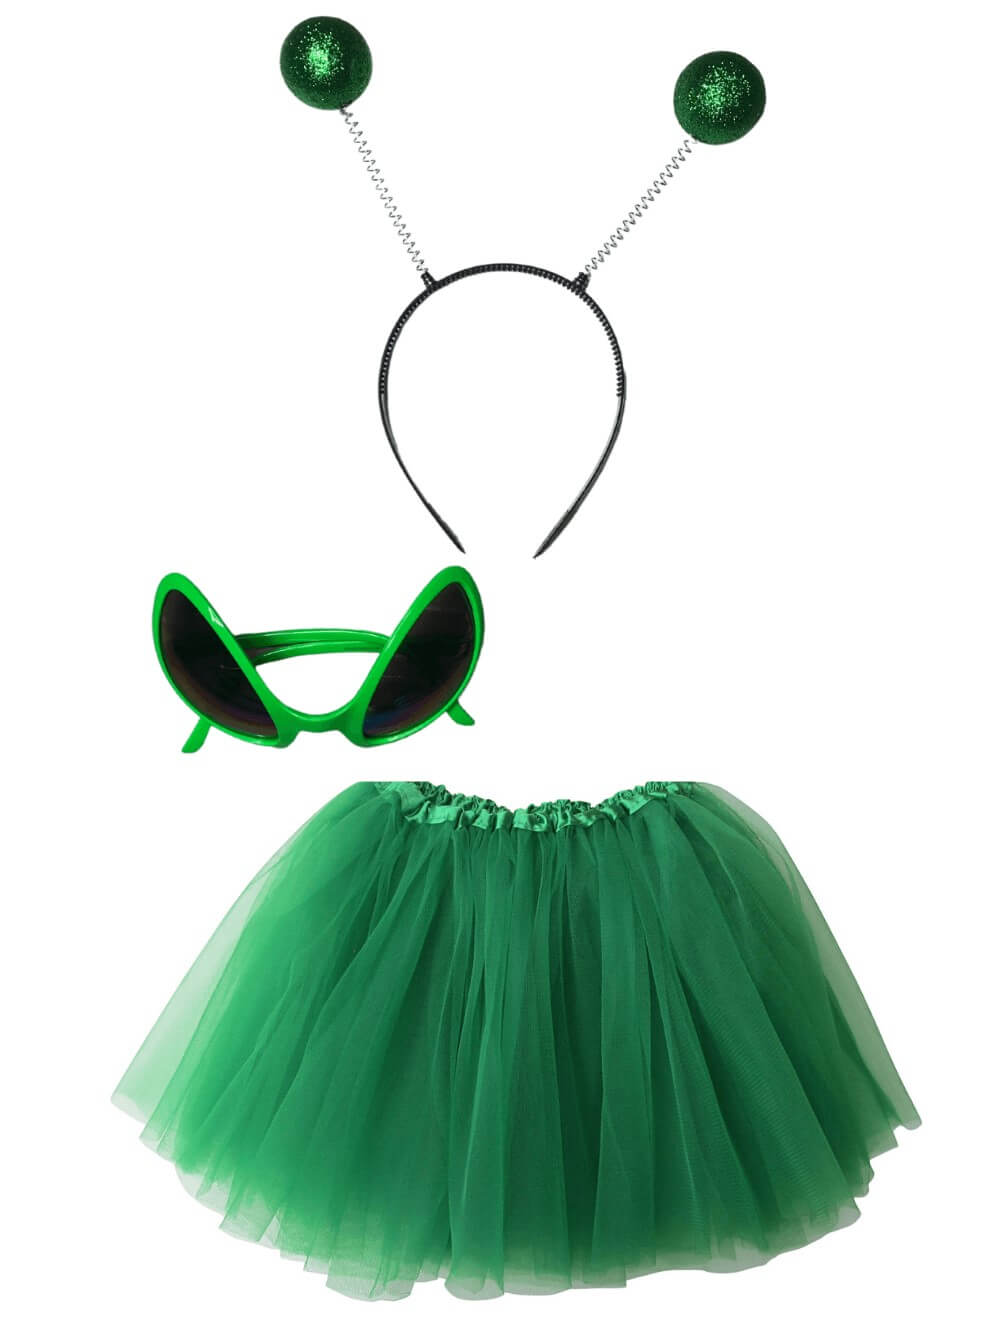 Adult Alien Costume Green - Tutu Skirt, Sunglasses, & Headband Set for Adult or Plus Size - Sydney So Sweet